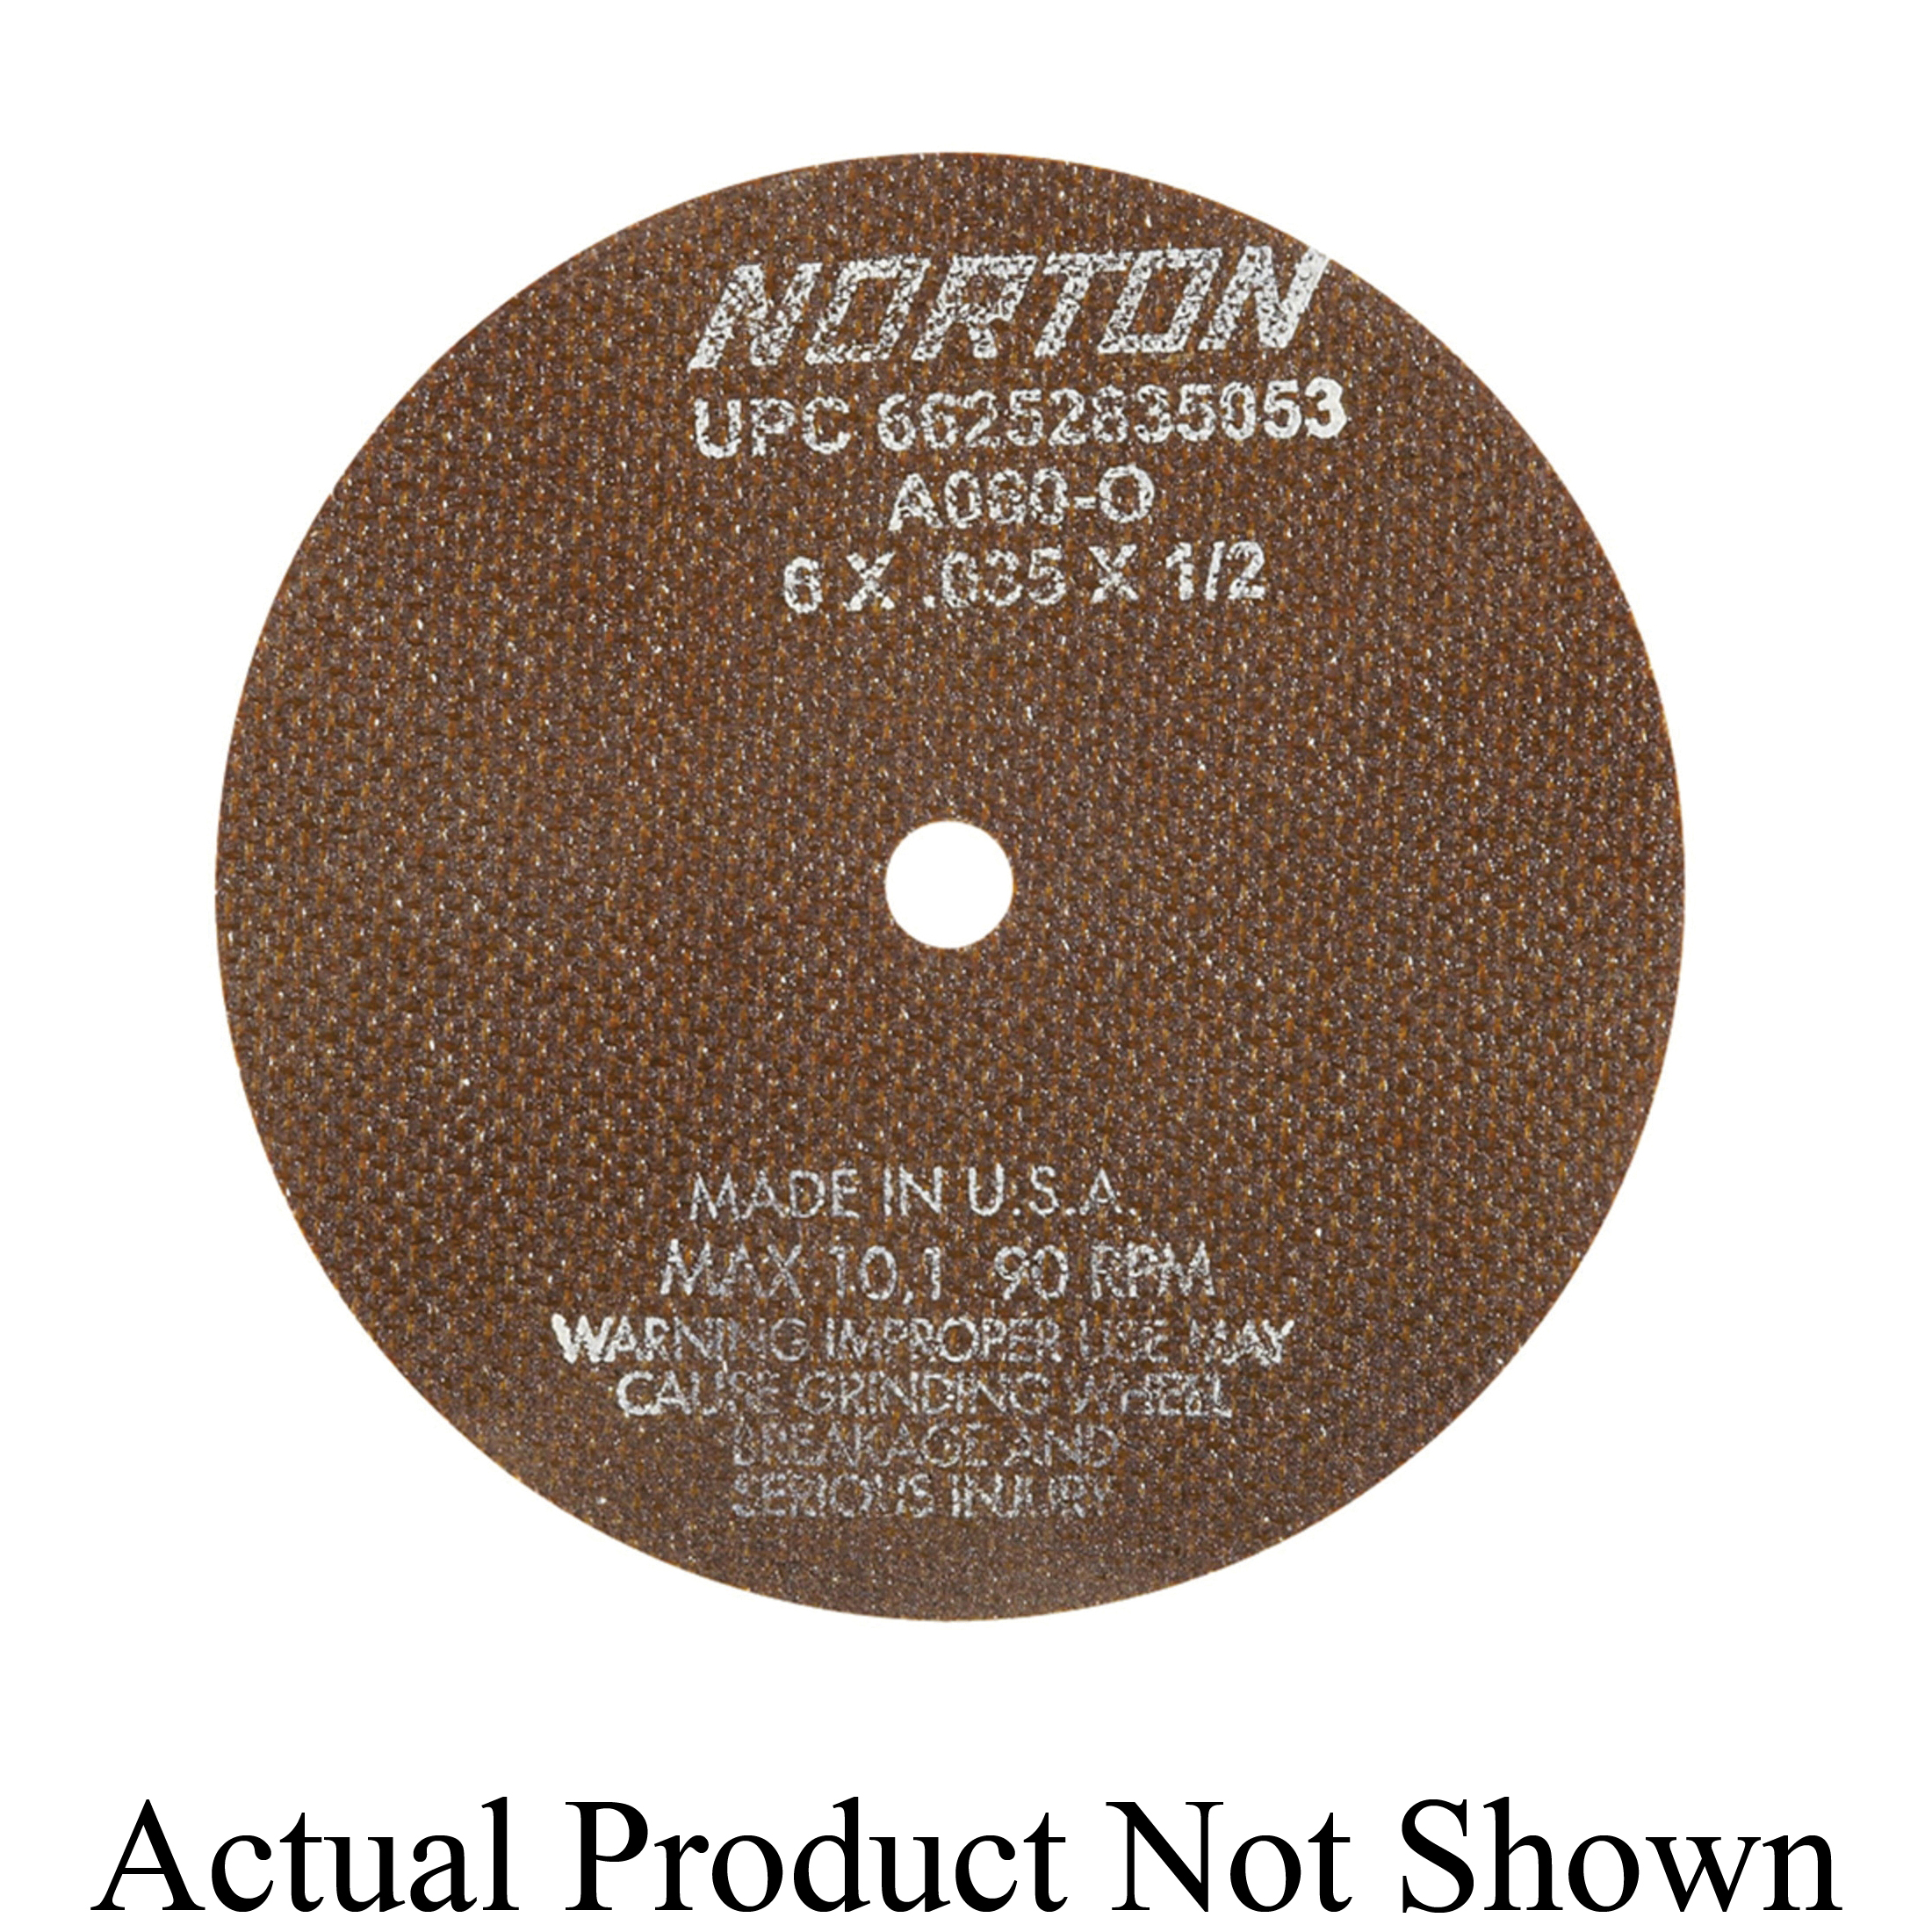 Norton® 66253042981 OBNA2 Toolroom Cut-Off Wheel, 8 in Dia x 0.06 in THK, 5/8 in Center Hole, 60 Grit, Aluminum Oxide Abrasive